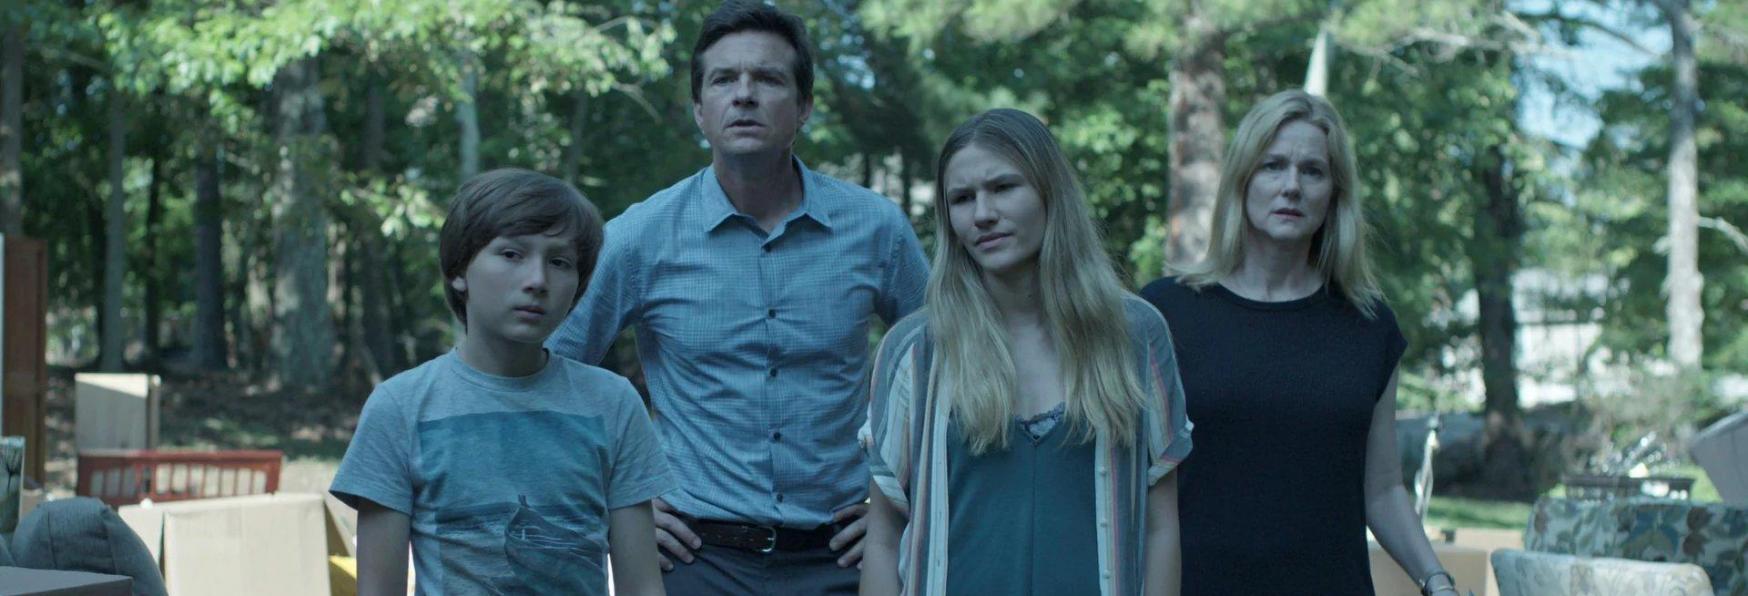 Ozark 4: Plot, Cast, Curiosity, Release Date and Trailer of the Netflix TV Series